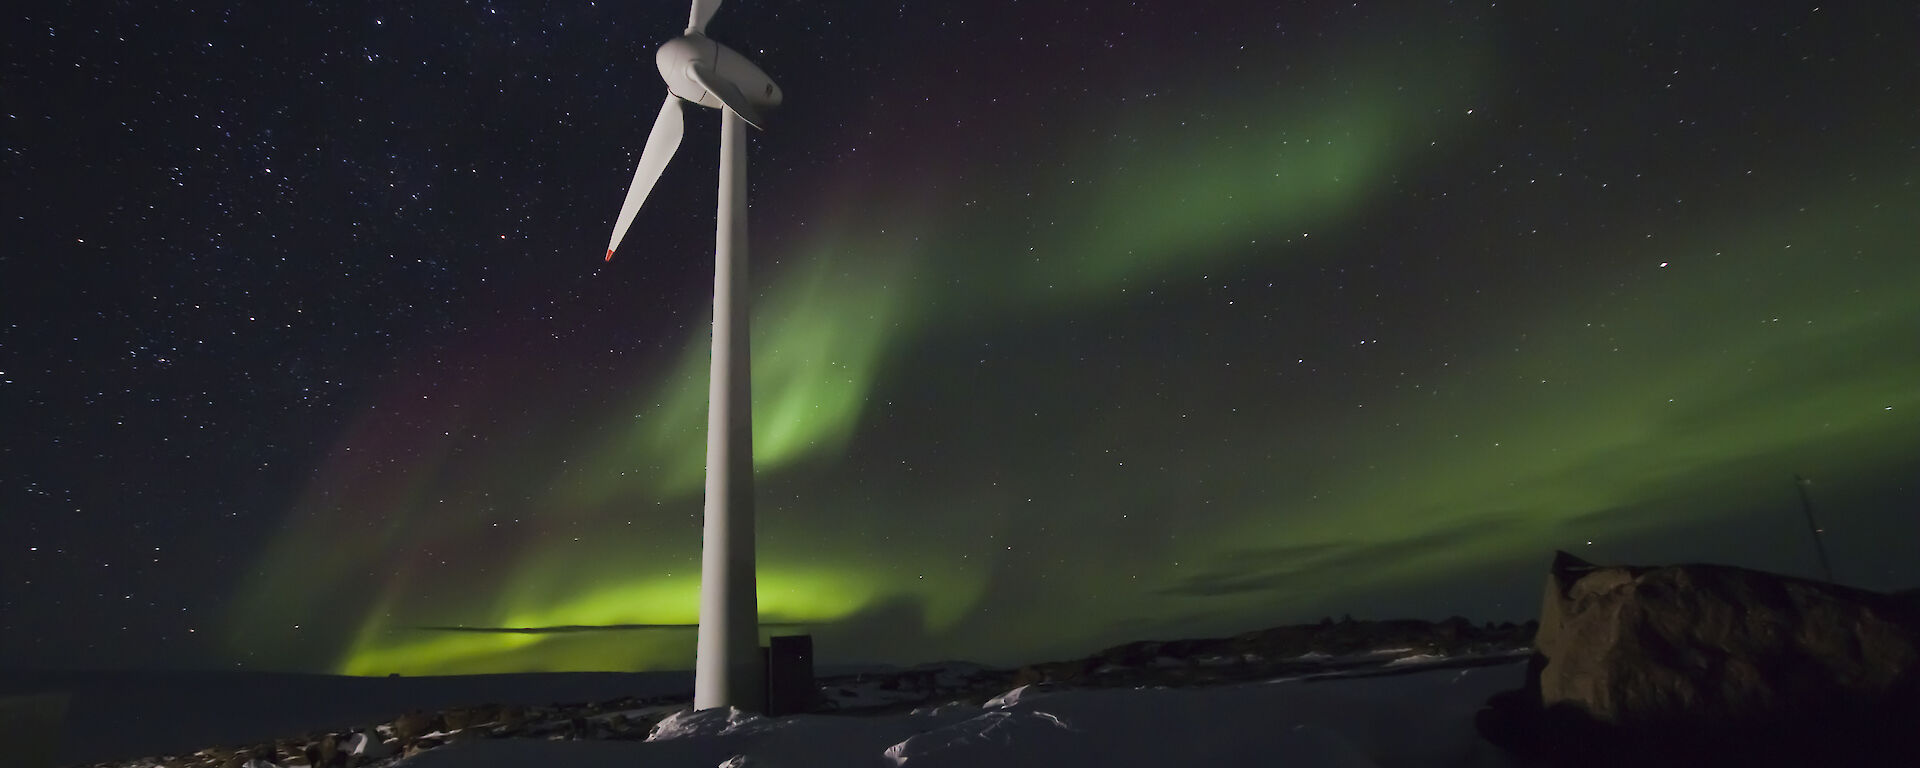 Mawson wind turbine with green aurora in the sky